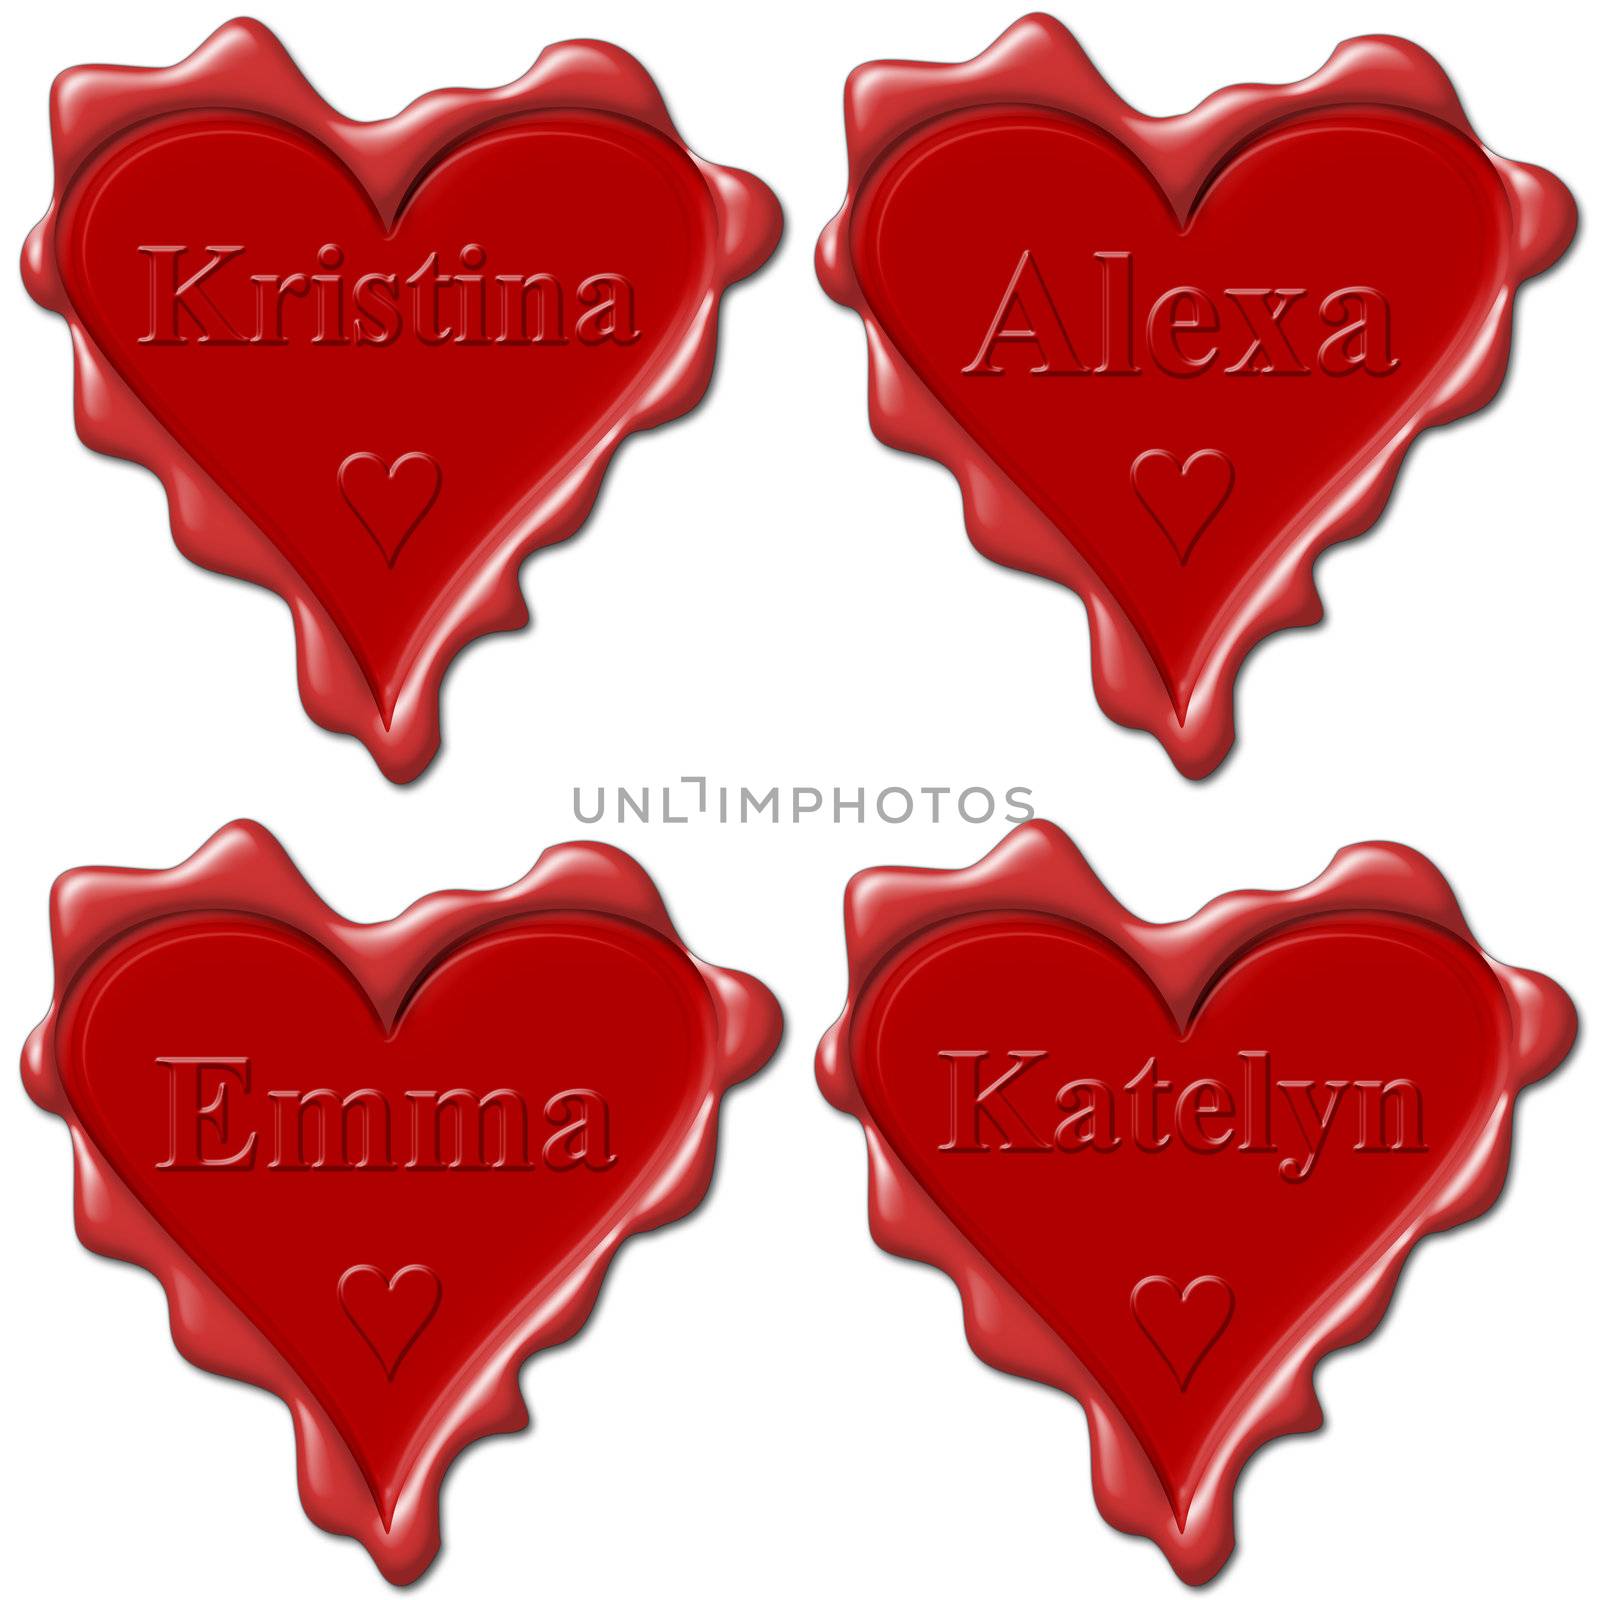 Valentine love hearts with names: Kristina, Alexa, Emma, Katelyn by mozzyb